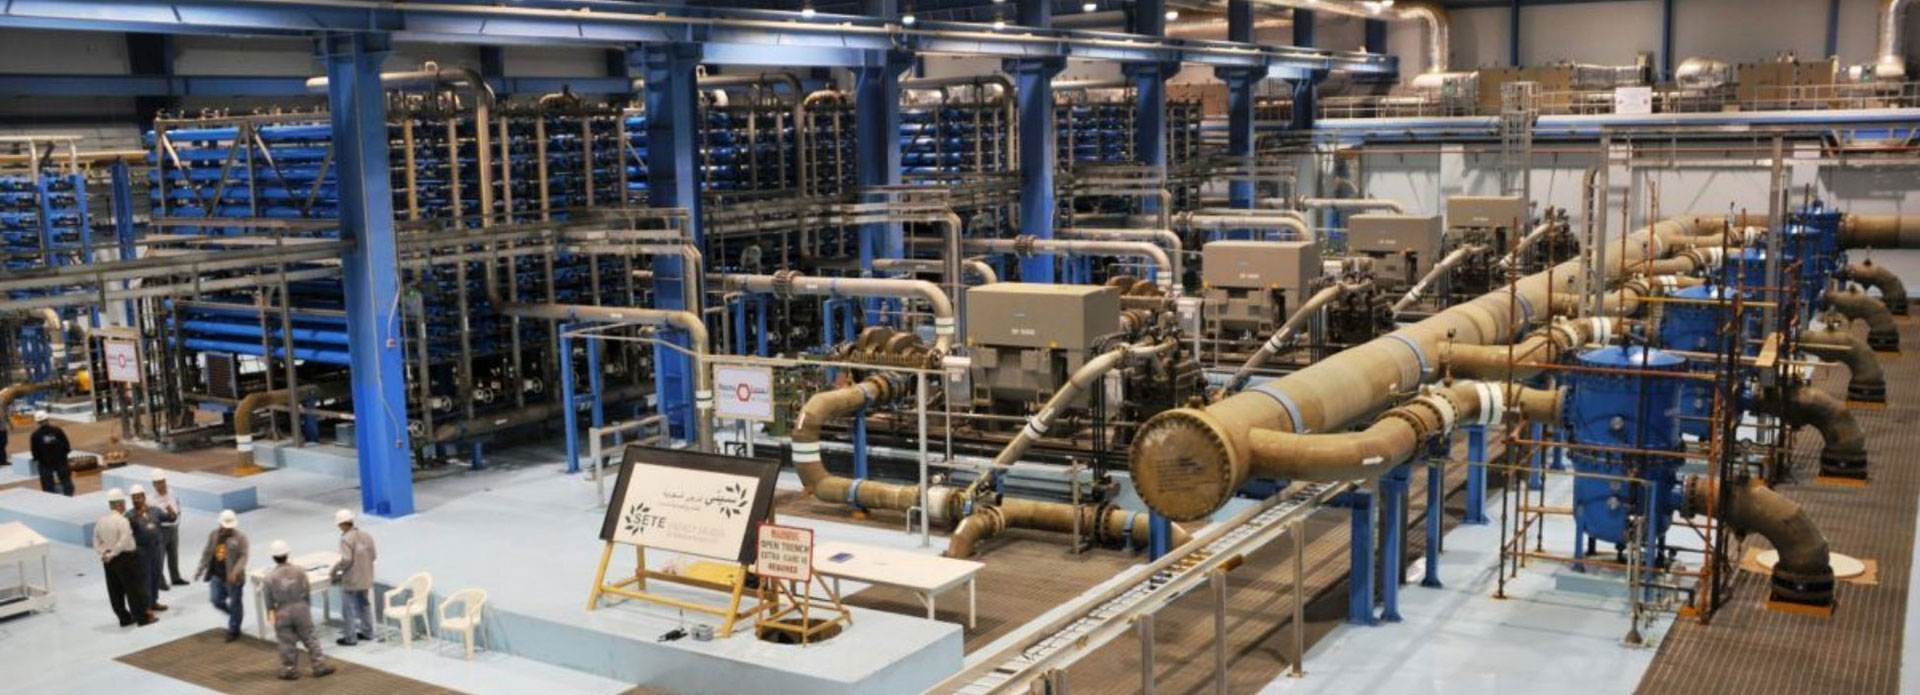 kaust water desalination plant